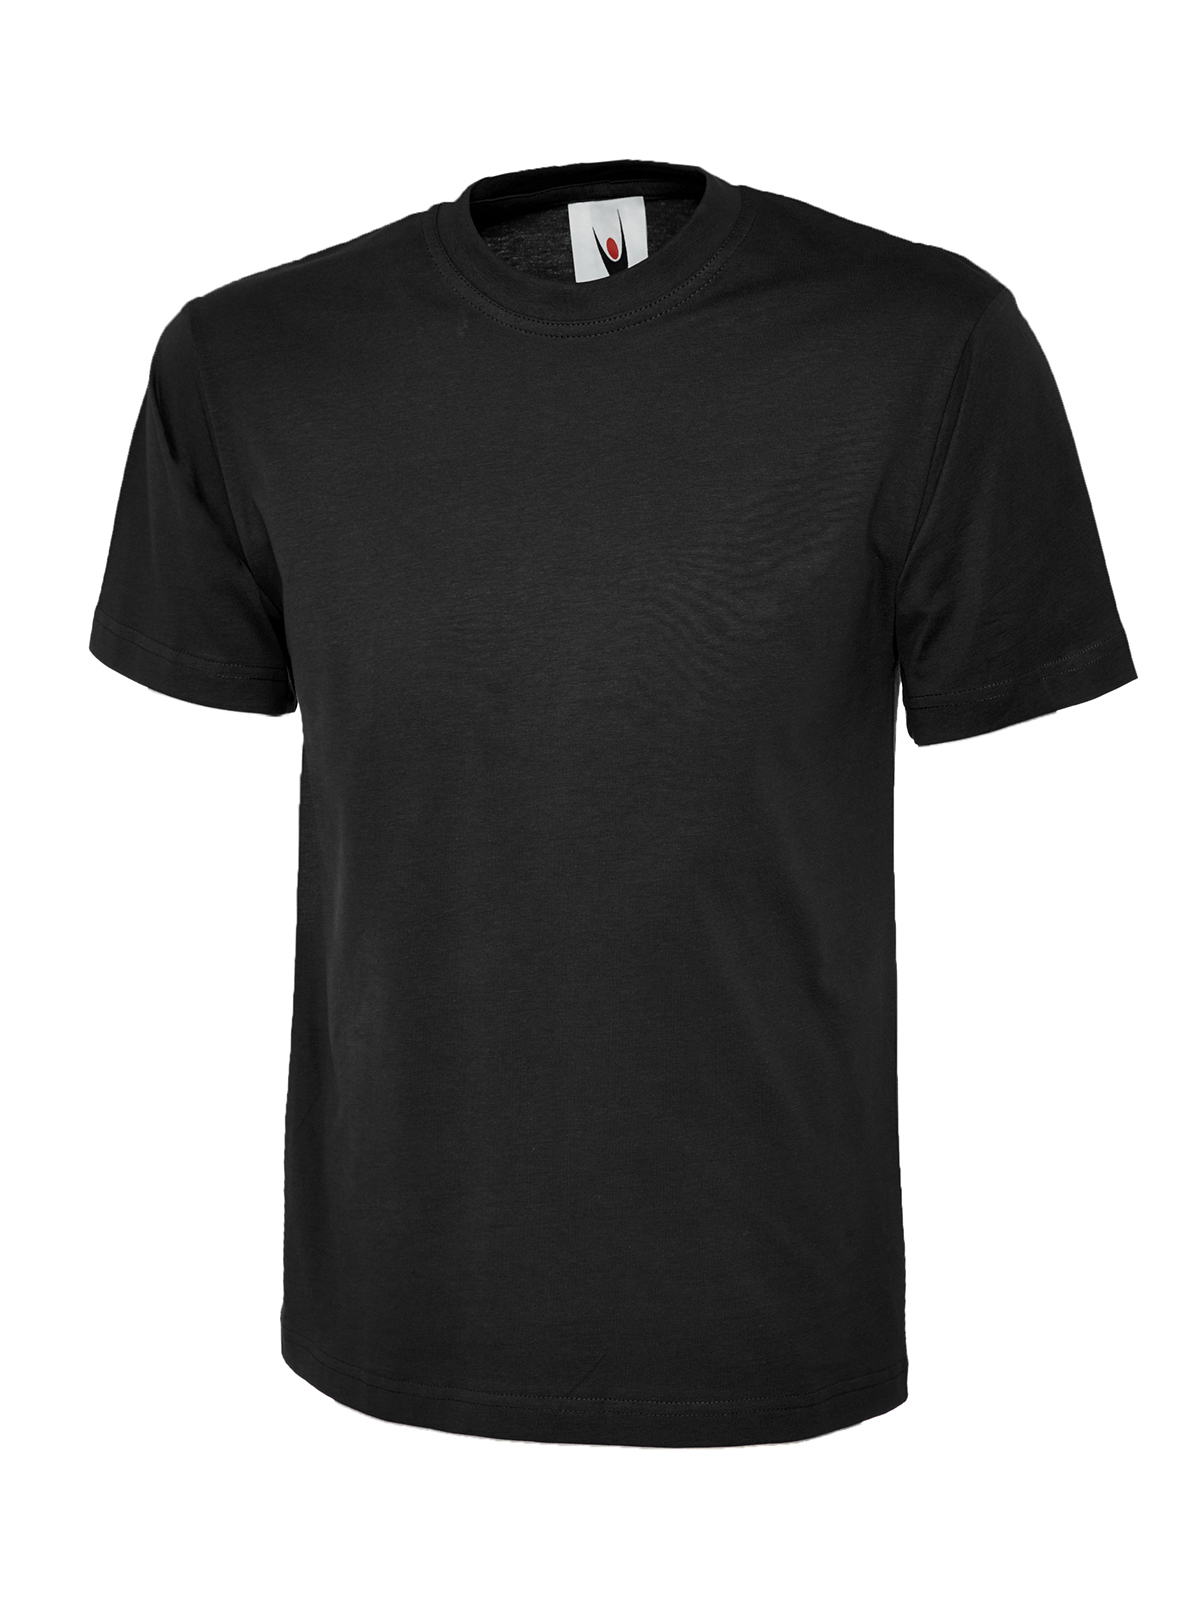 Uneek Herren T-Shirt Premium schwarz